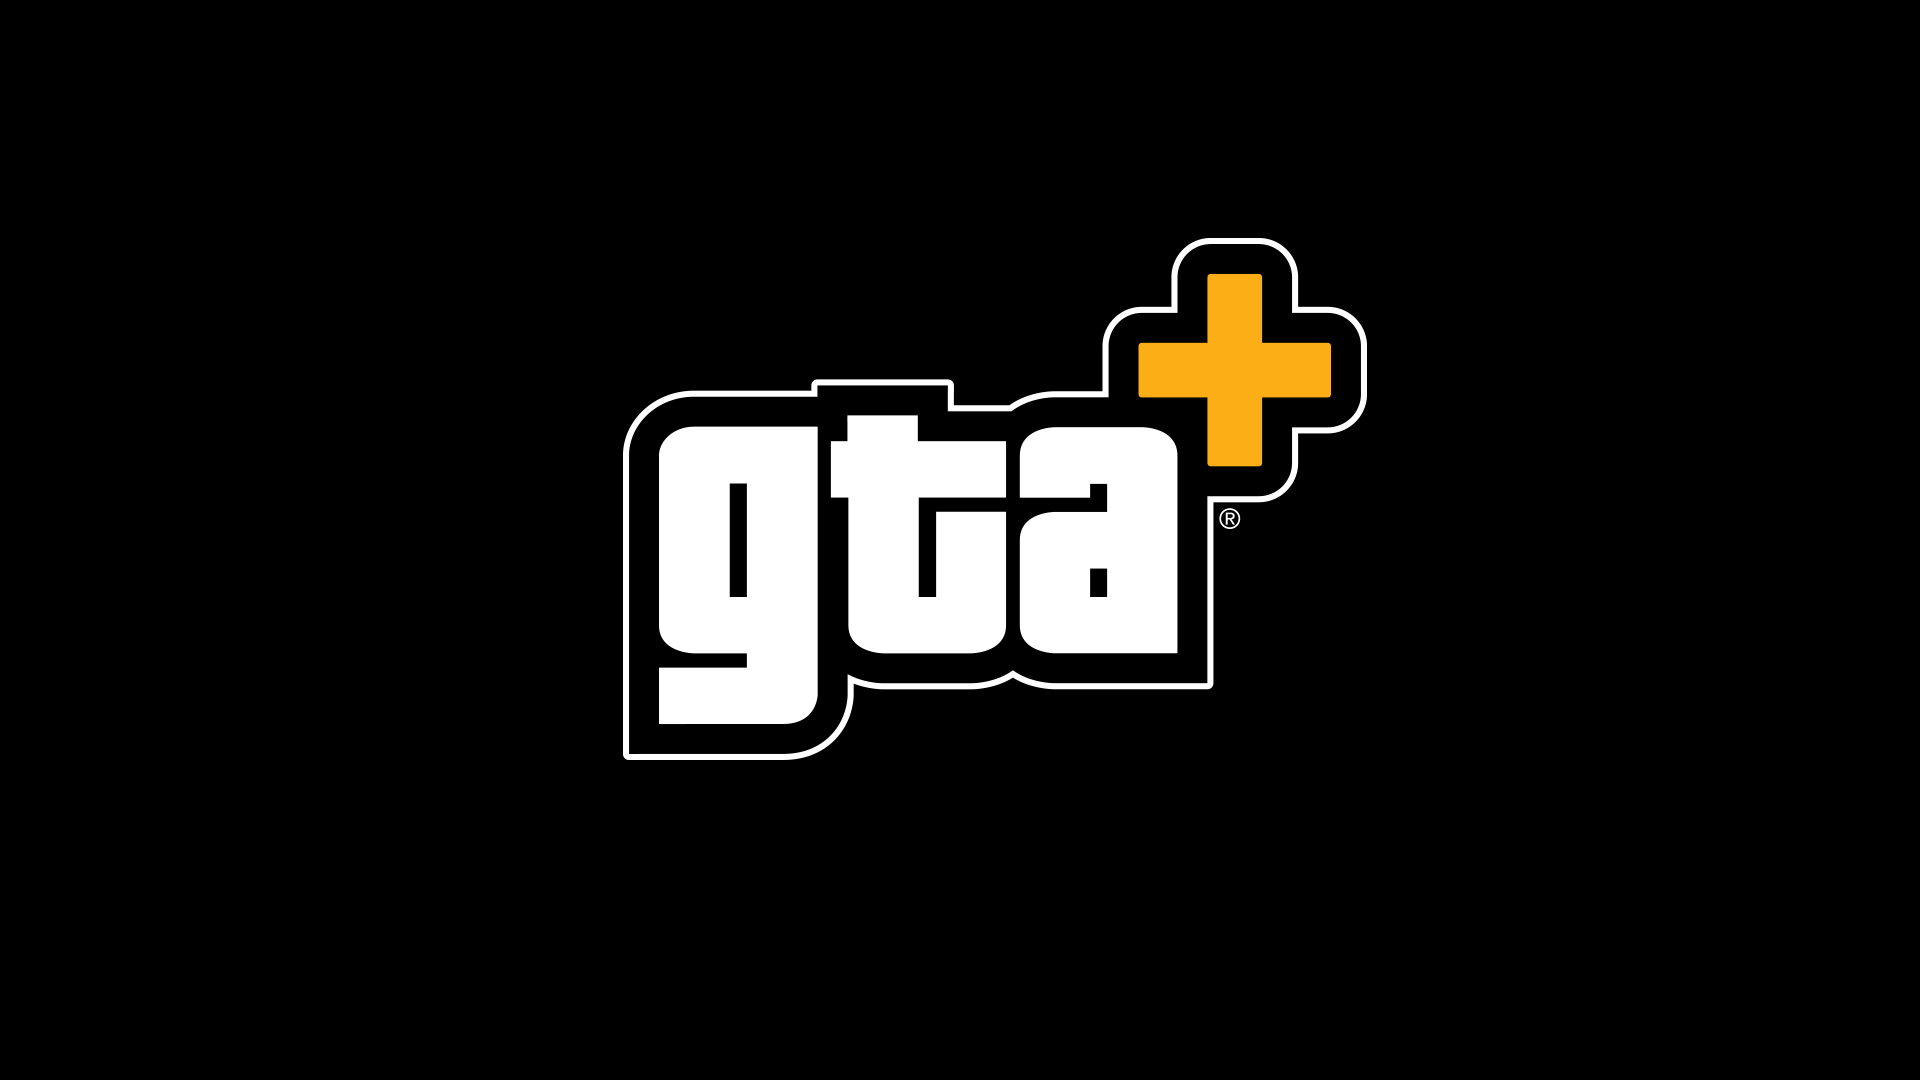 For more information on the latest GTA+ benefits, visit https://rockstargames.com/gtaplus